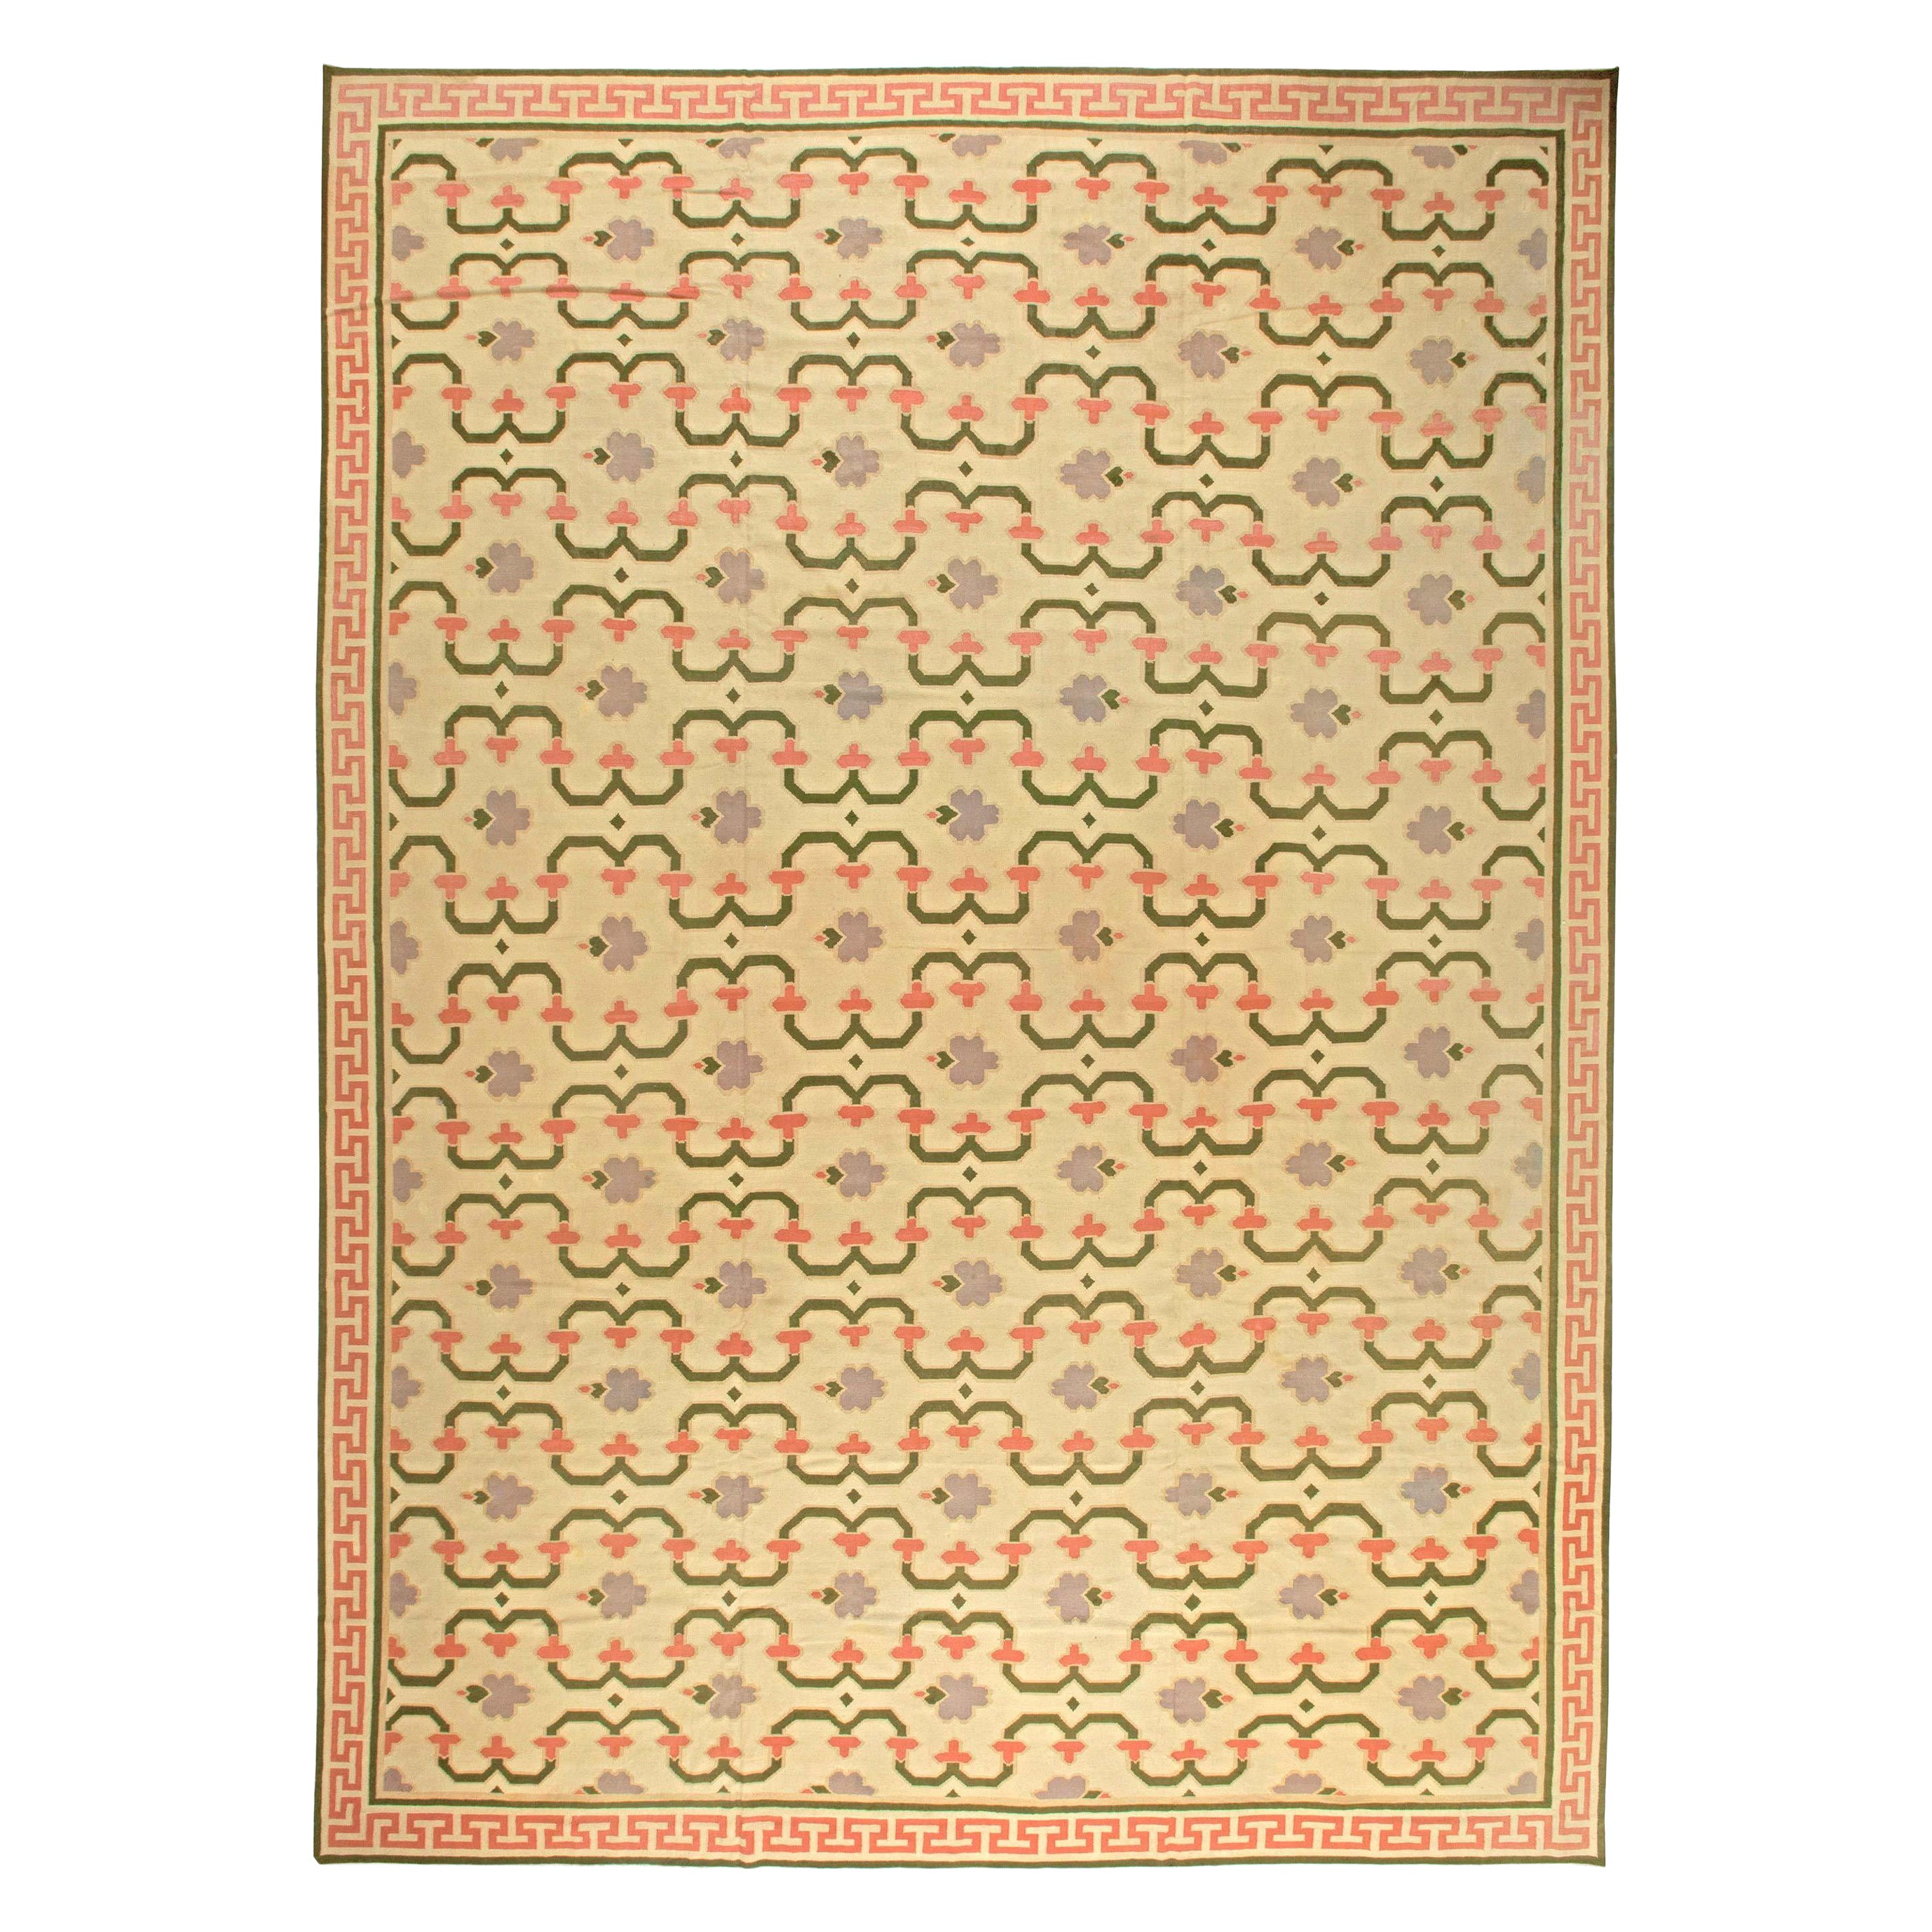 Midcentury Indian Dhurrie Handwoven Cotton Rug